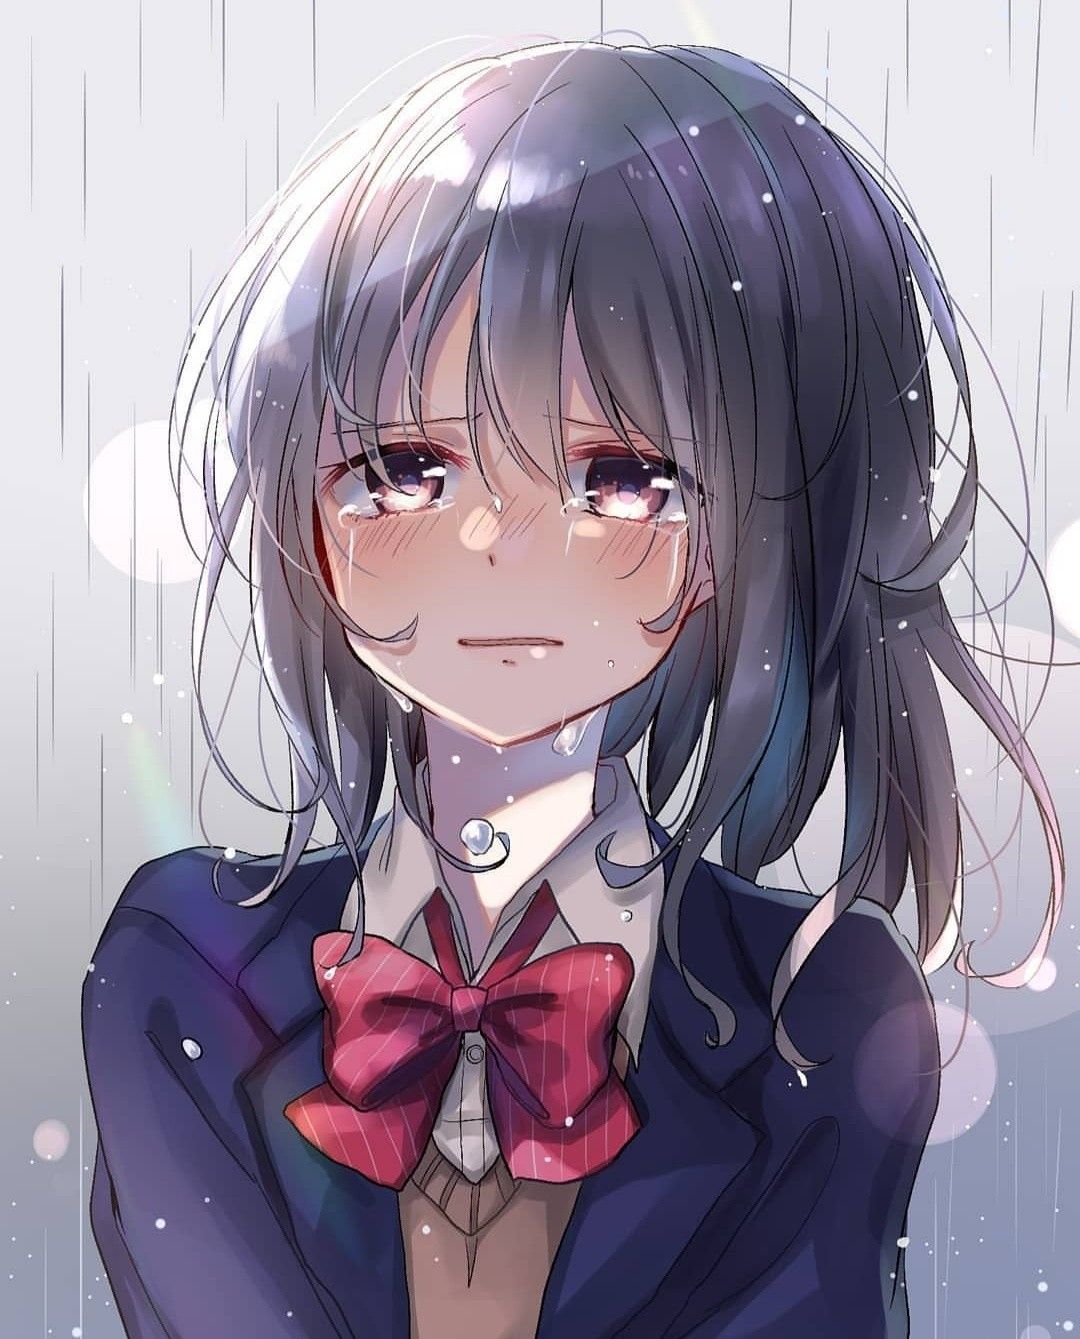 Sad cute anime girl crying